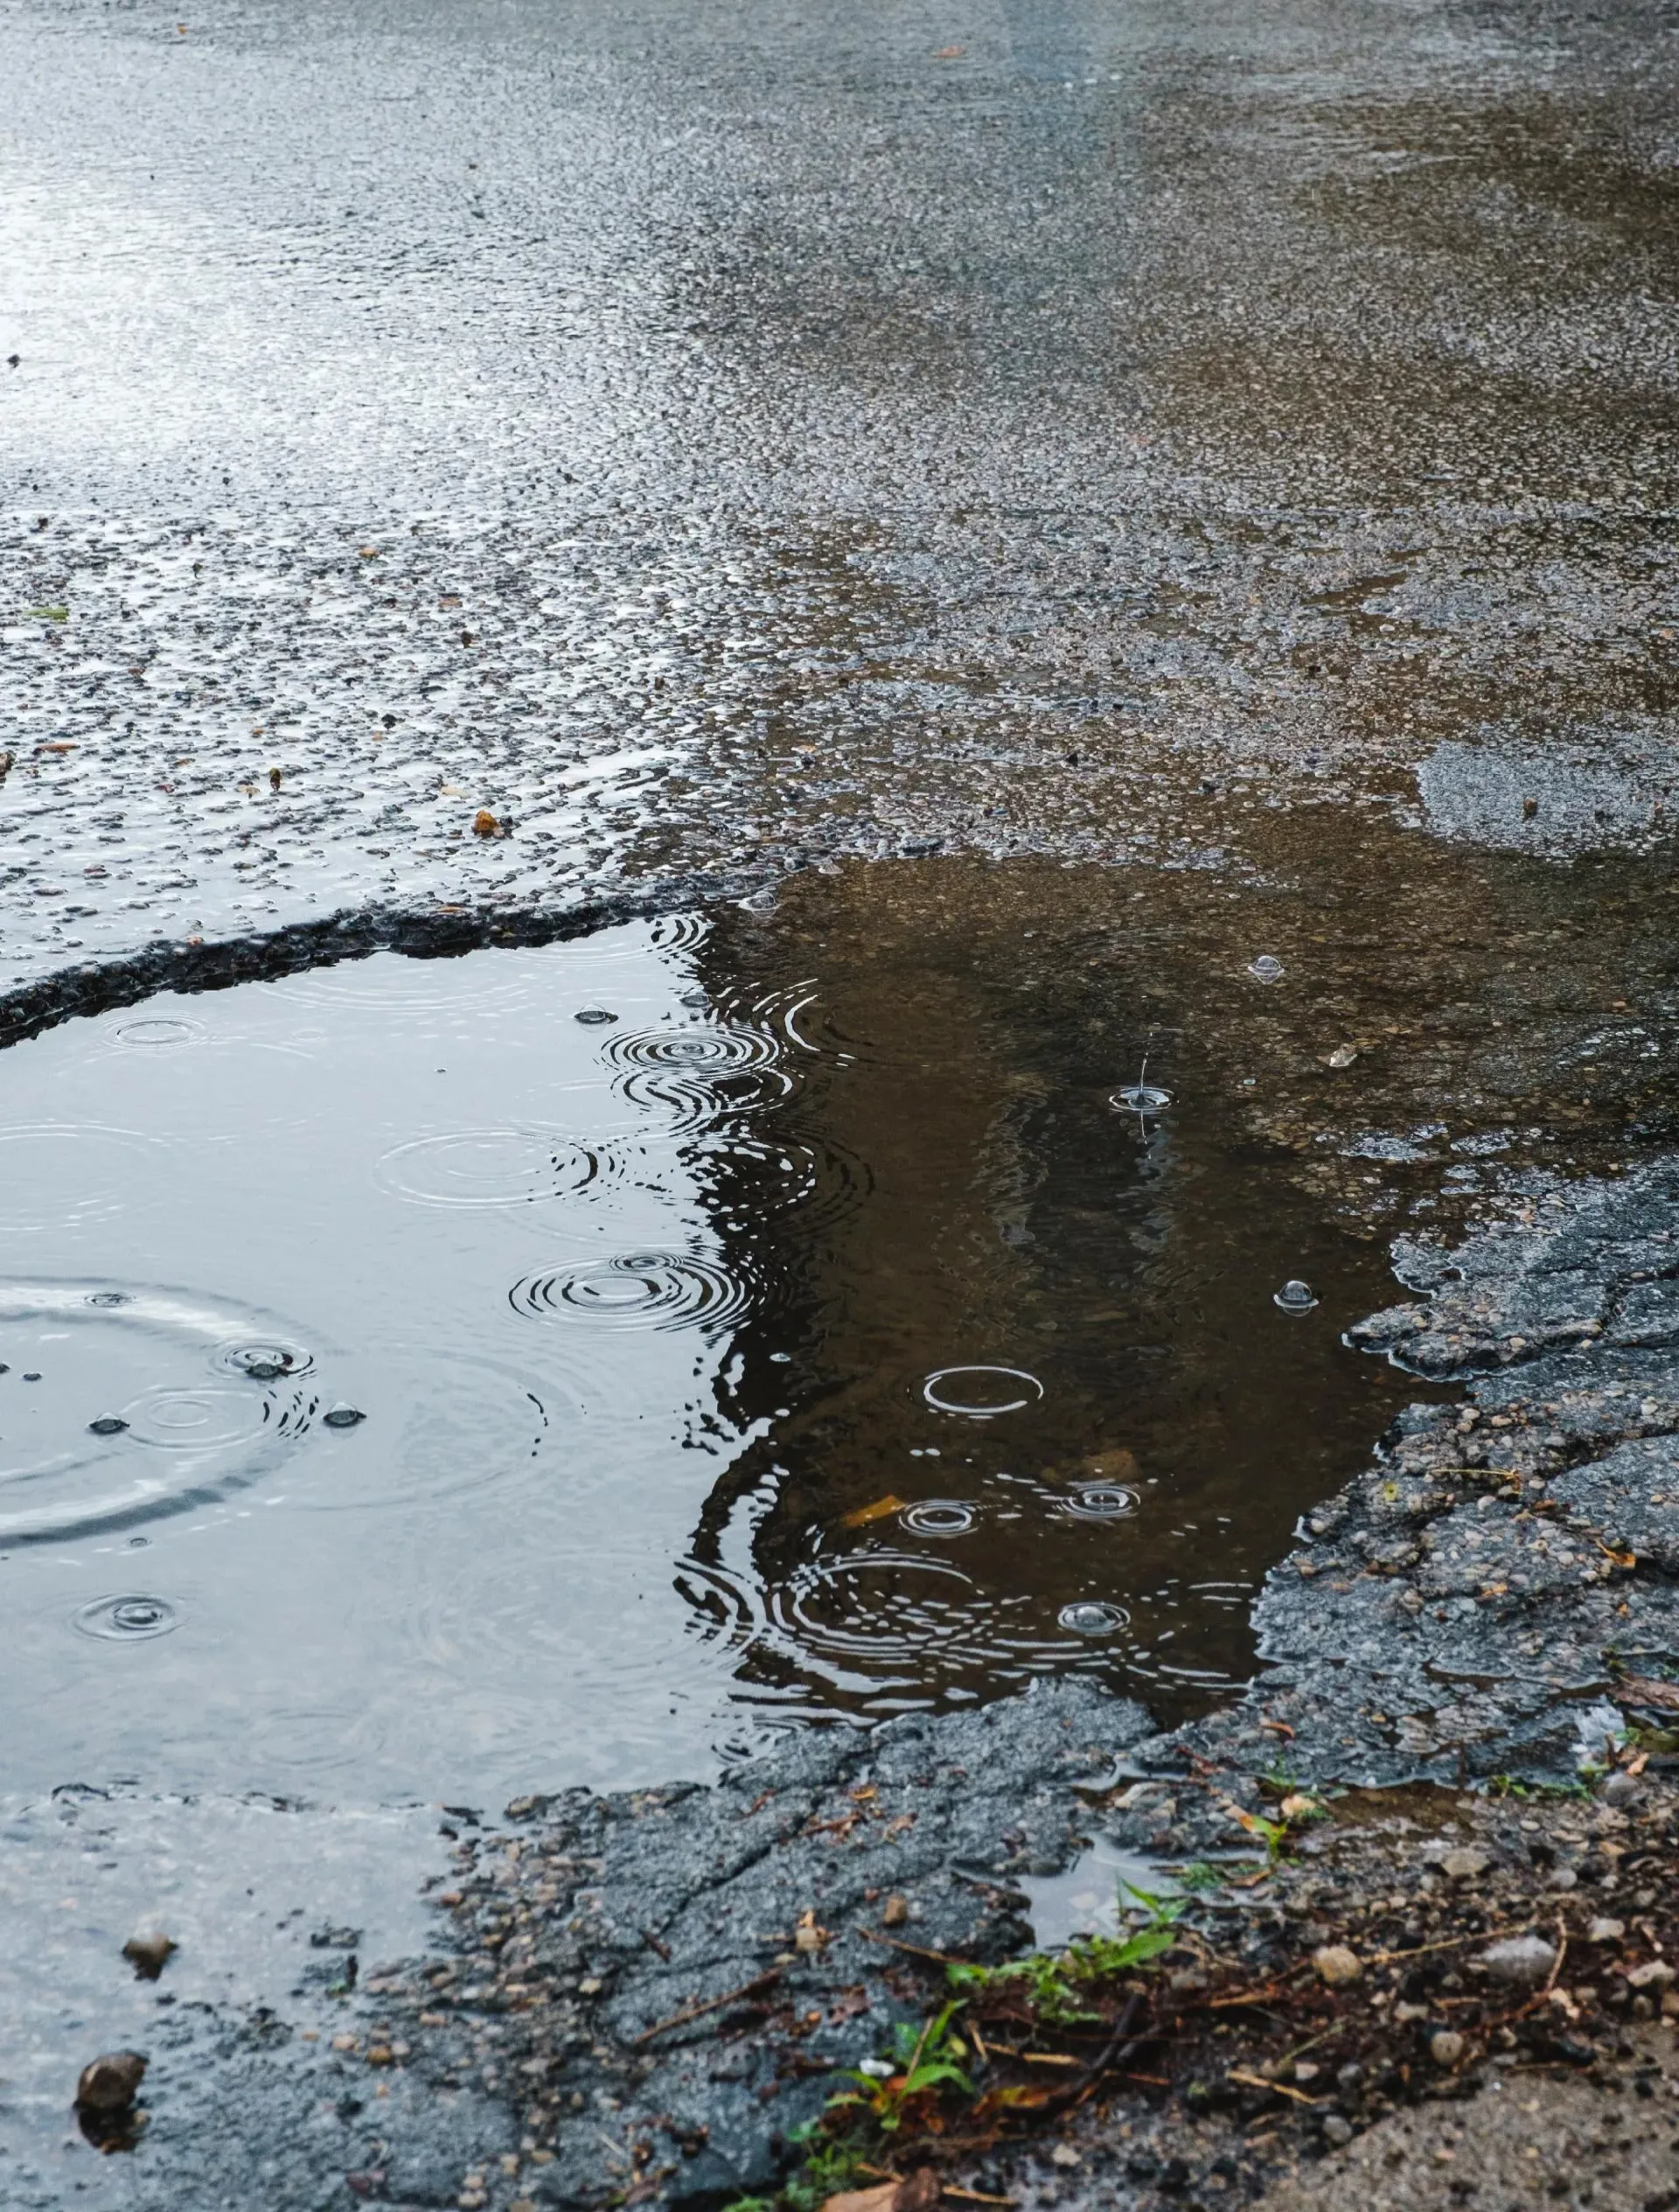 Pothole in need of repair in parking lot in jacksonville, fl